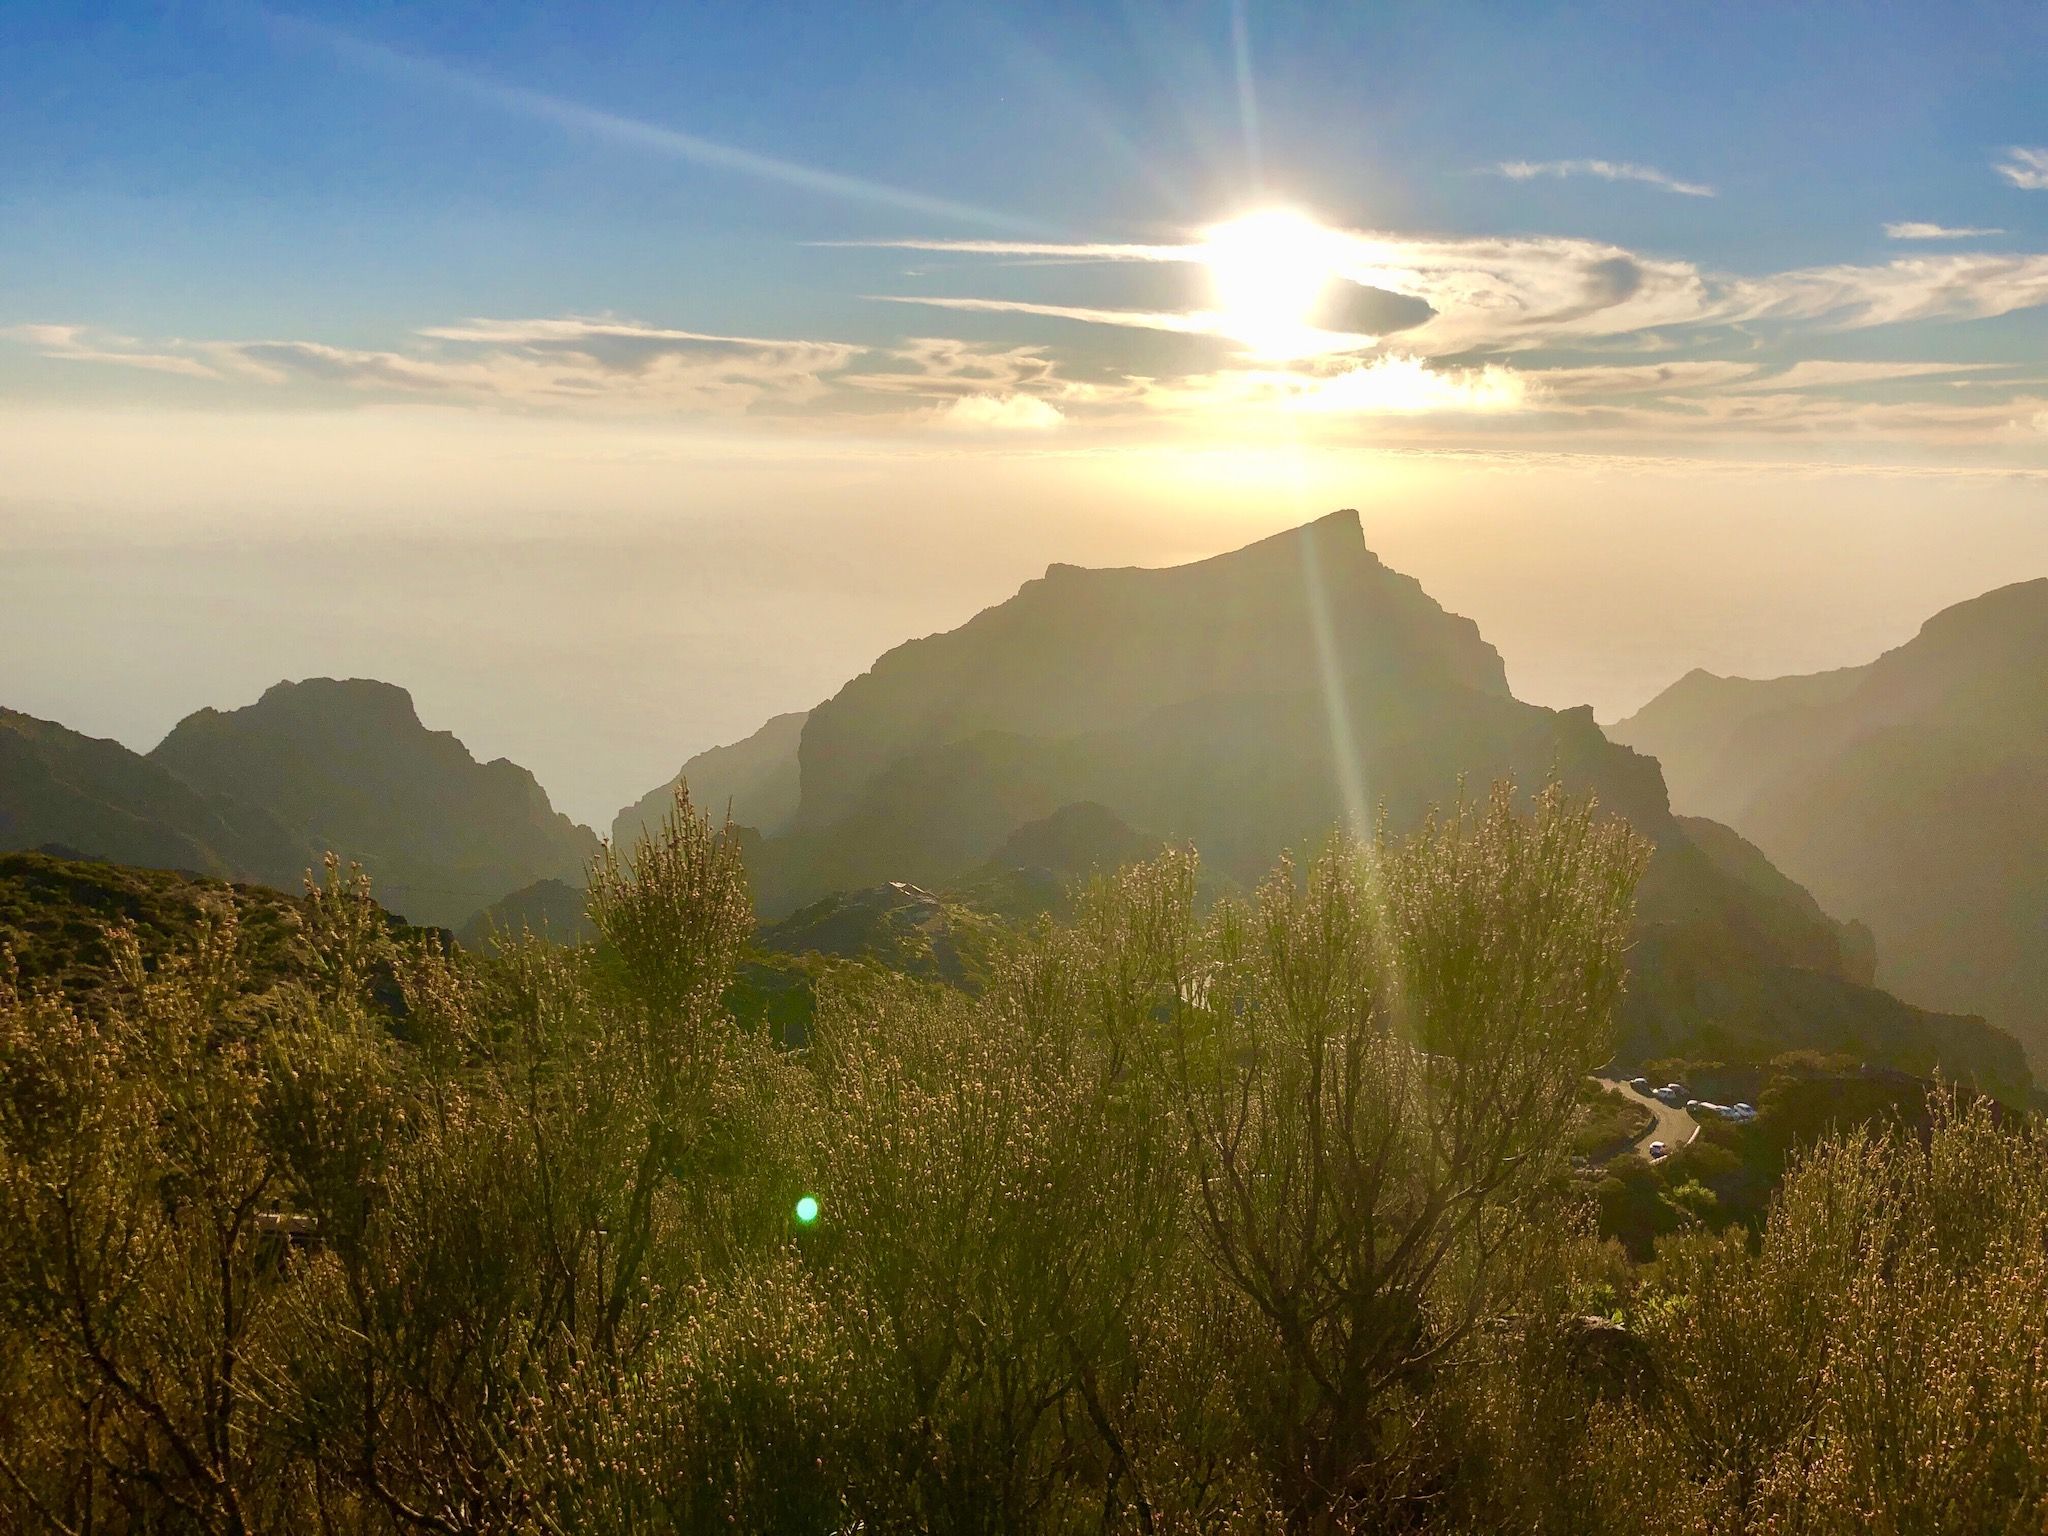 Masca mountains: evening panorama on Tenerife. Photo: Sascha Tegtmeyer